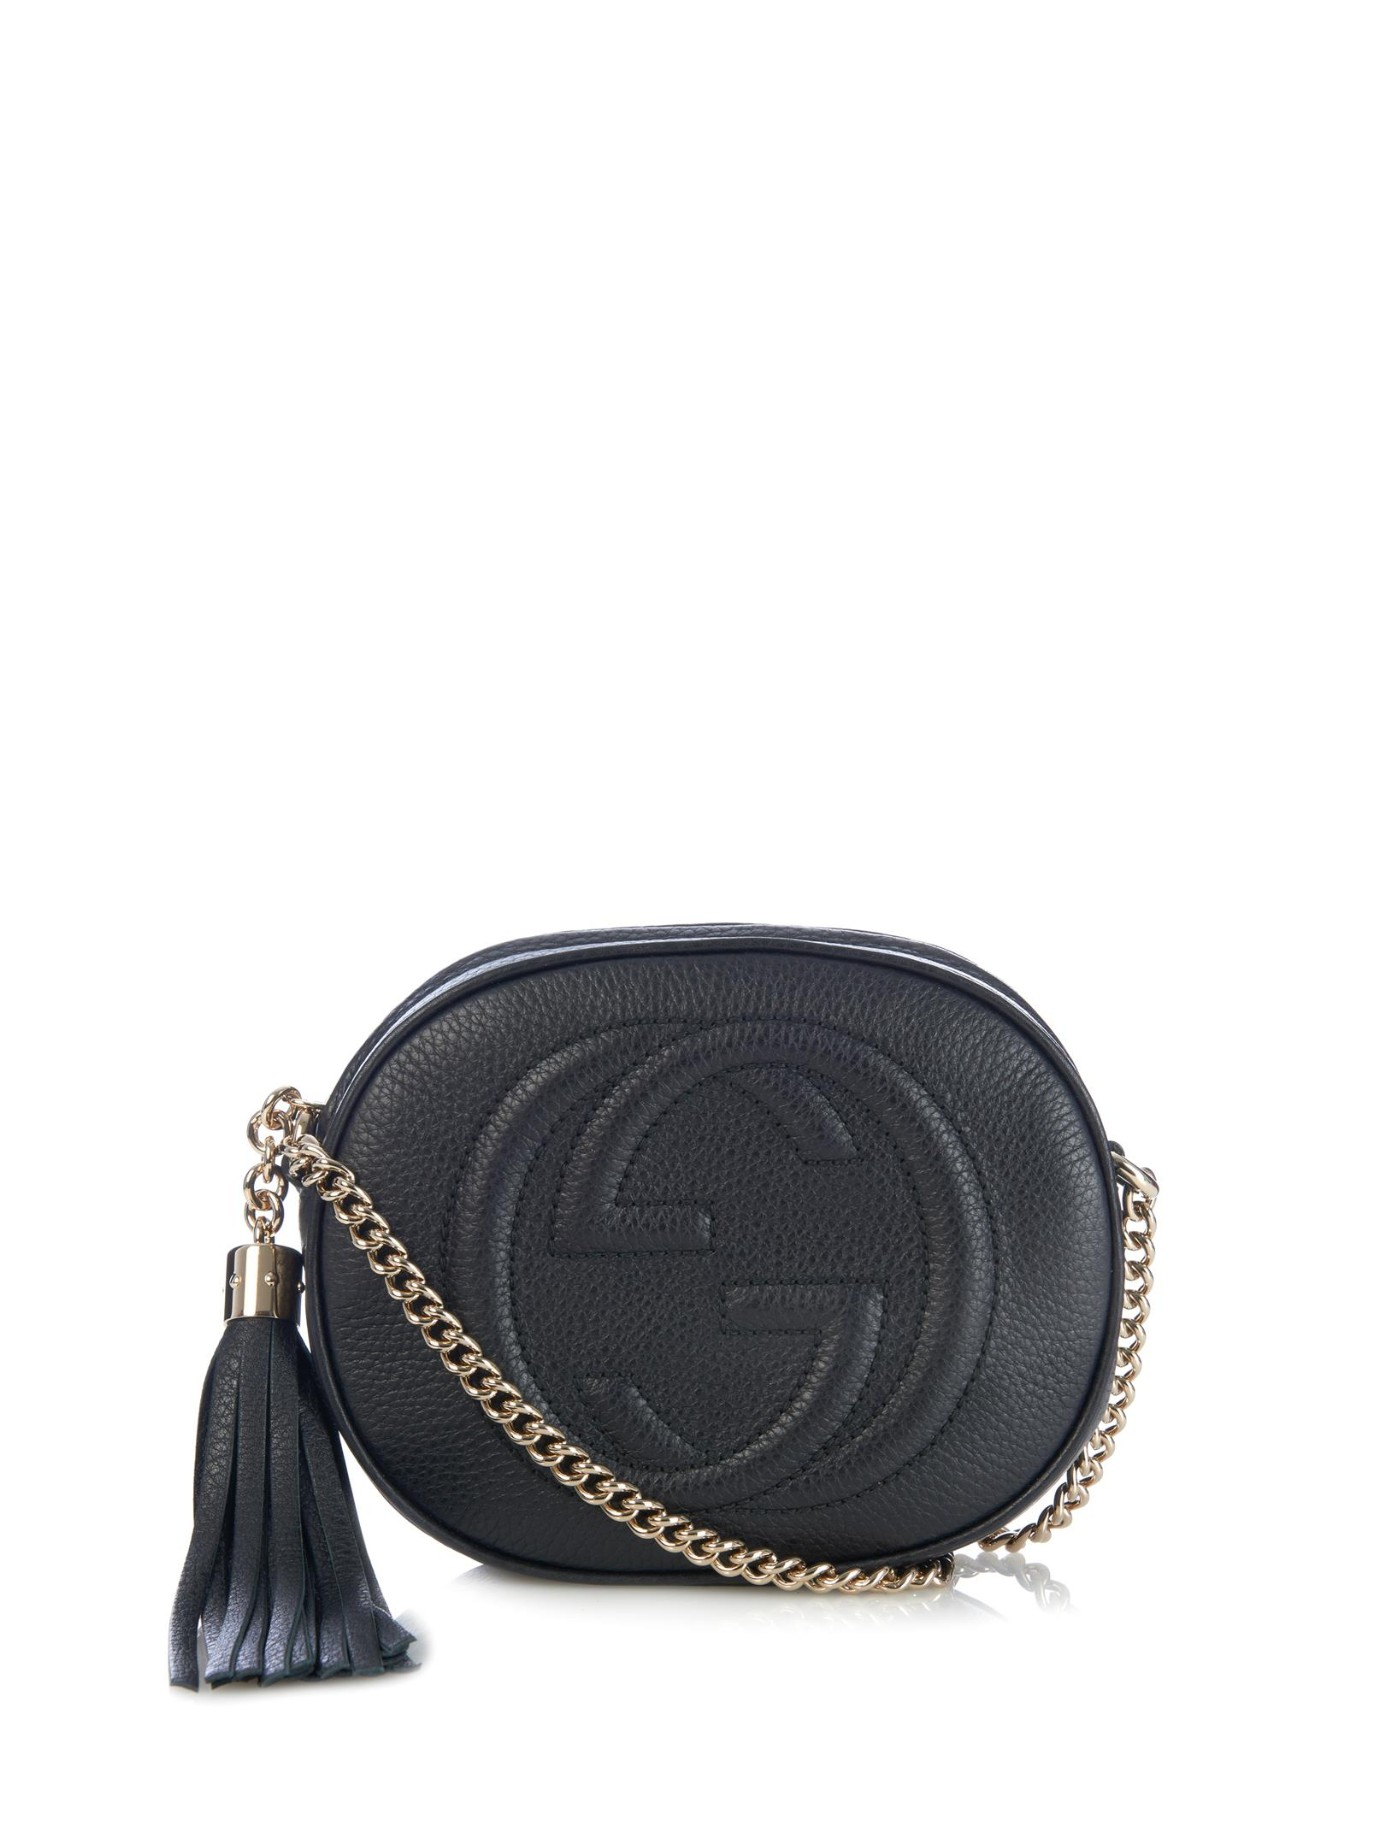 Lyst - Gucci Mini Soho Chain-Strap Cross-Body Bag in Black